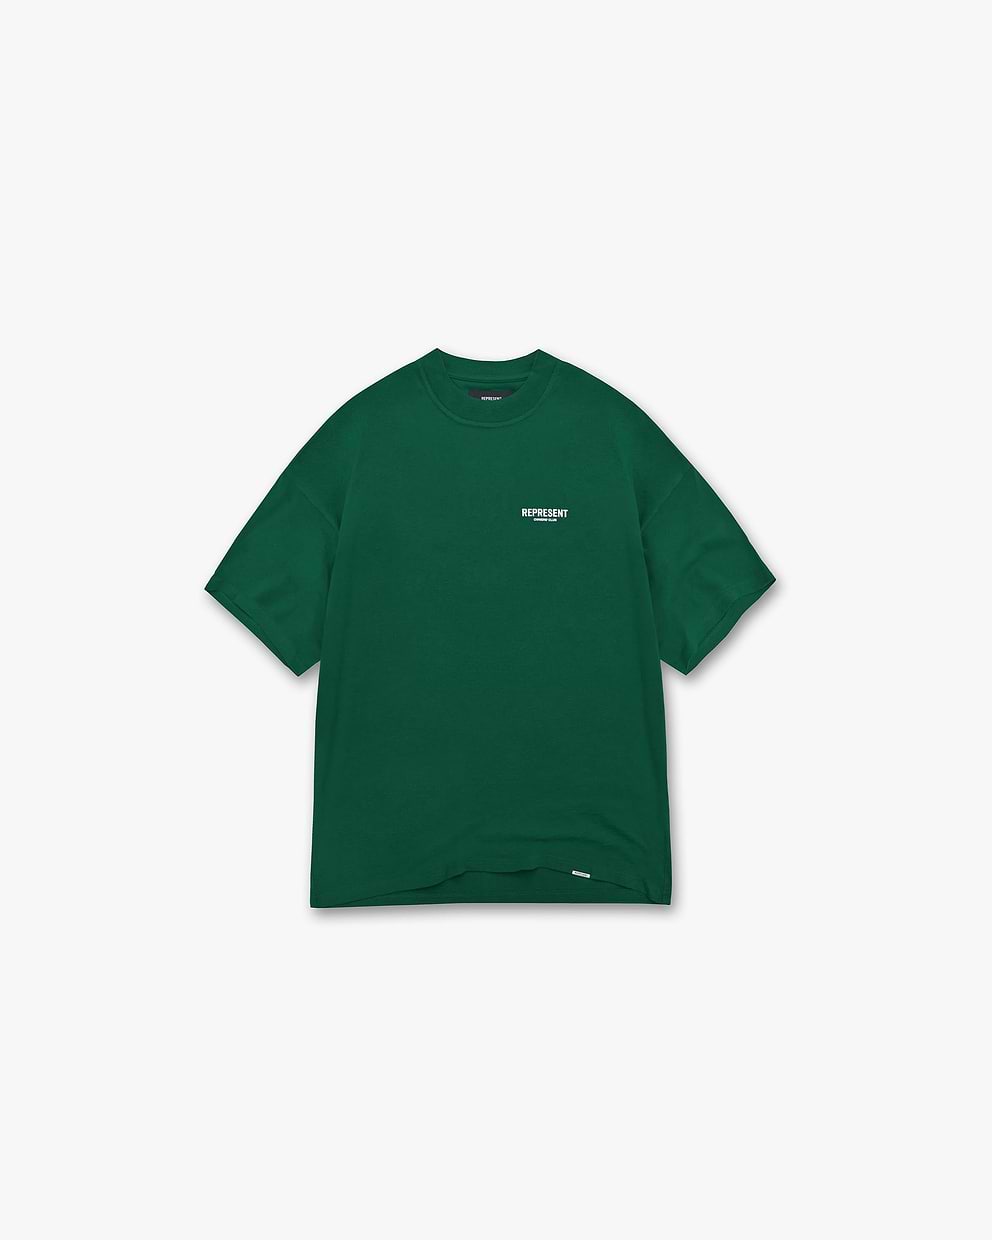 Represent Owners Club T-Shirt - Racing Green